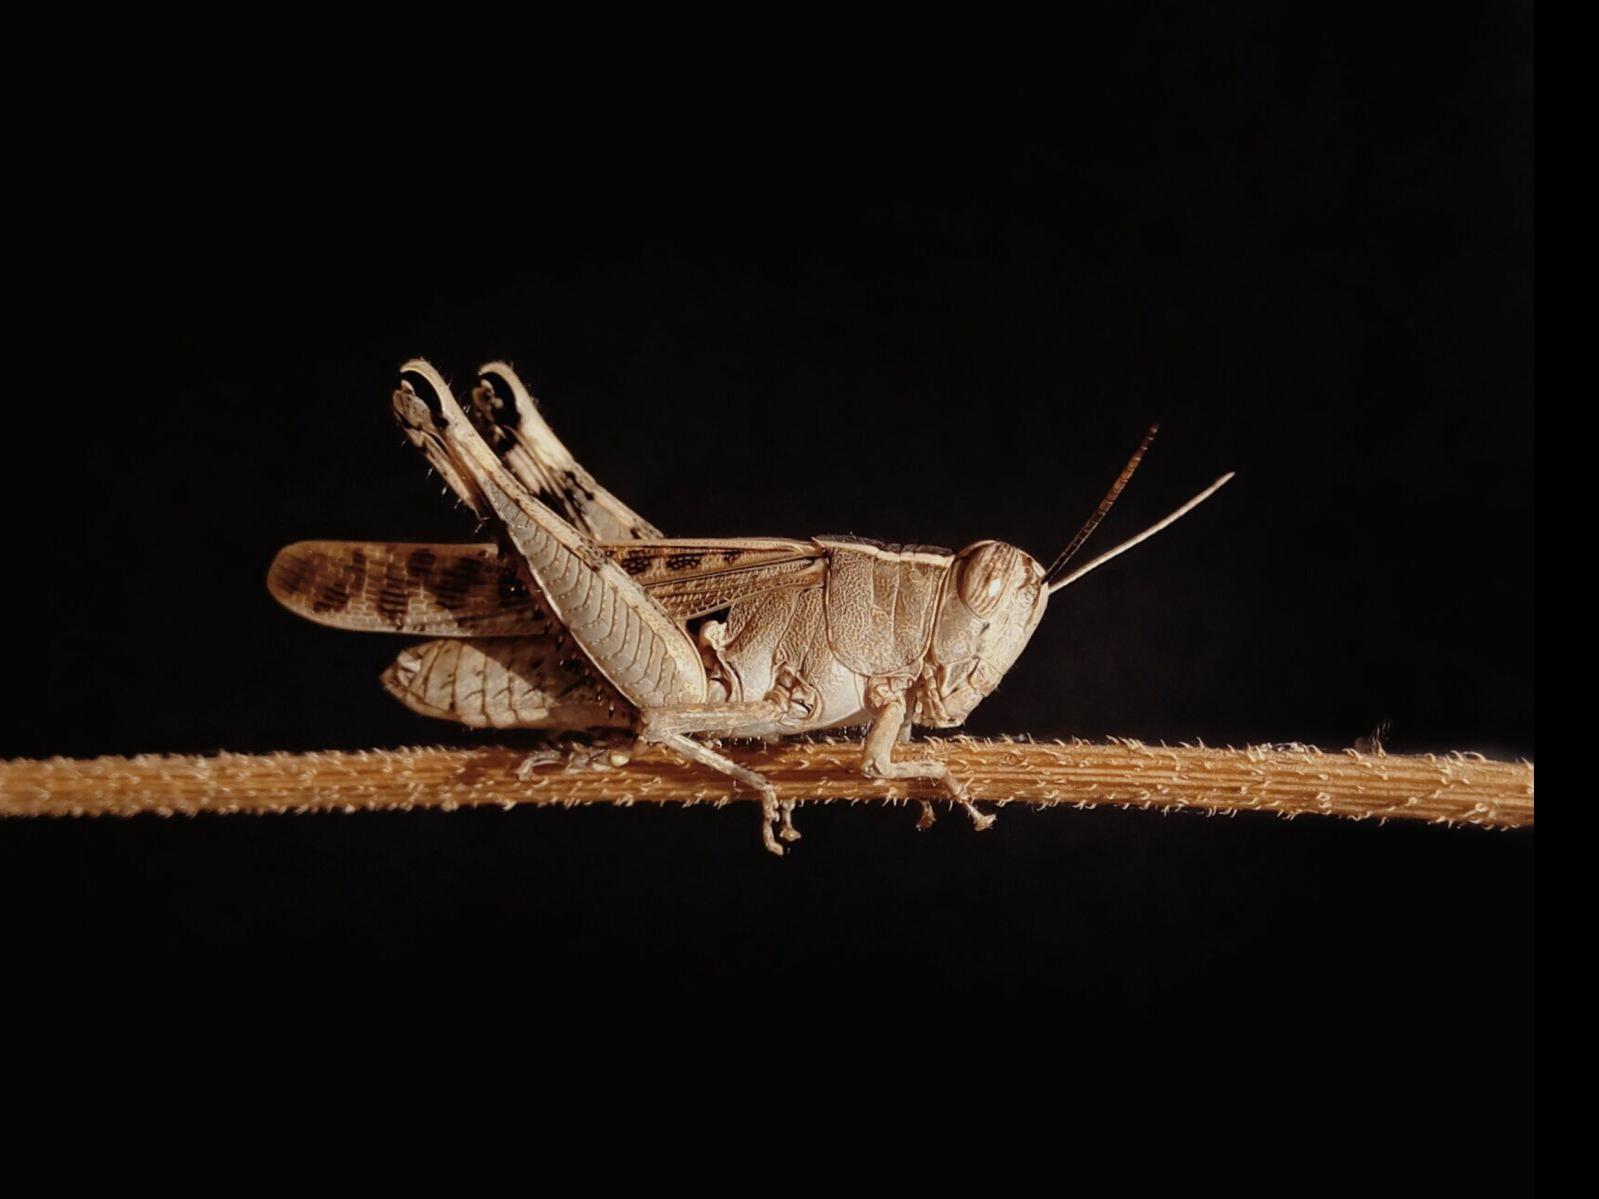 Here's Why There Are So Many Crickets Across South Louisiana